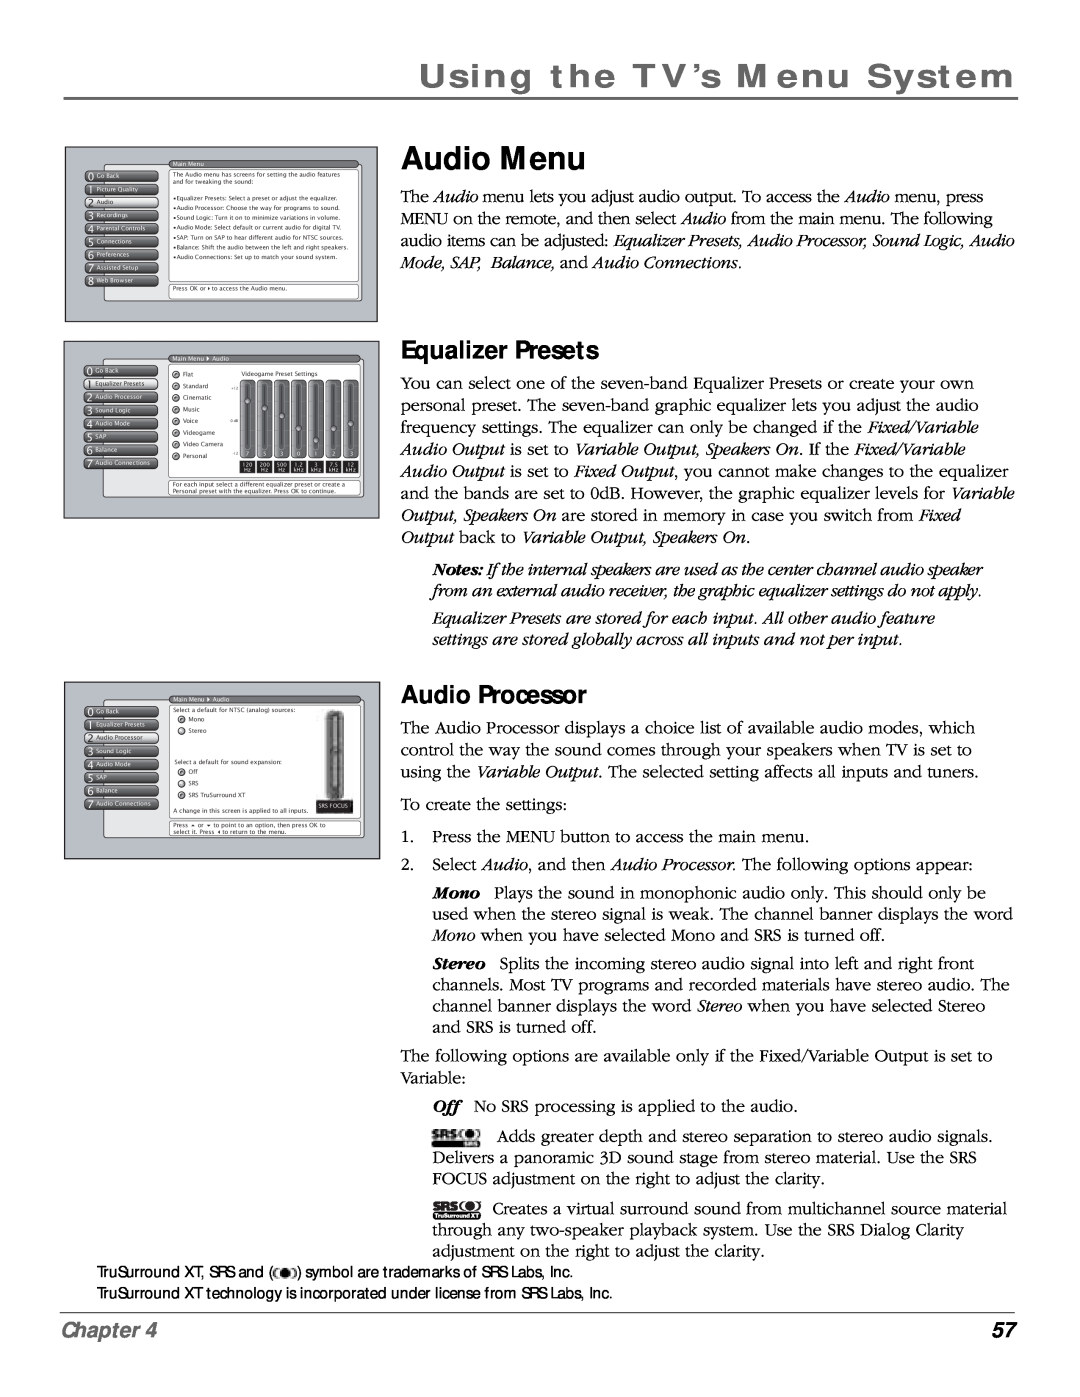 RCA scenium manual Audio Menu, Equalizer Presets, Audio Processor, Using the TV’s Menu System, Chapter 